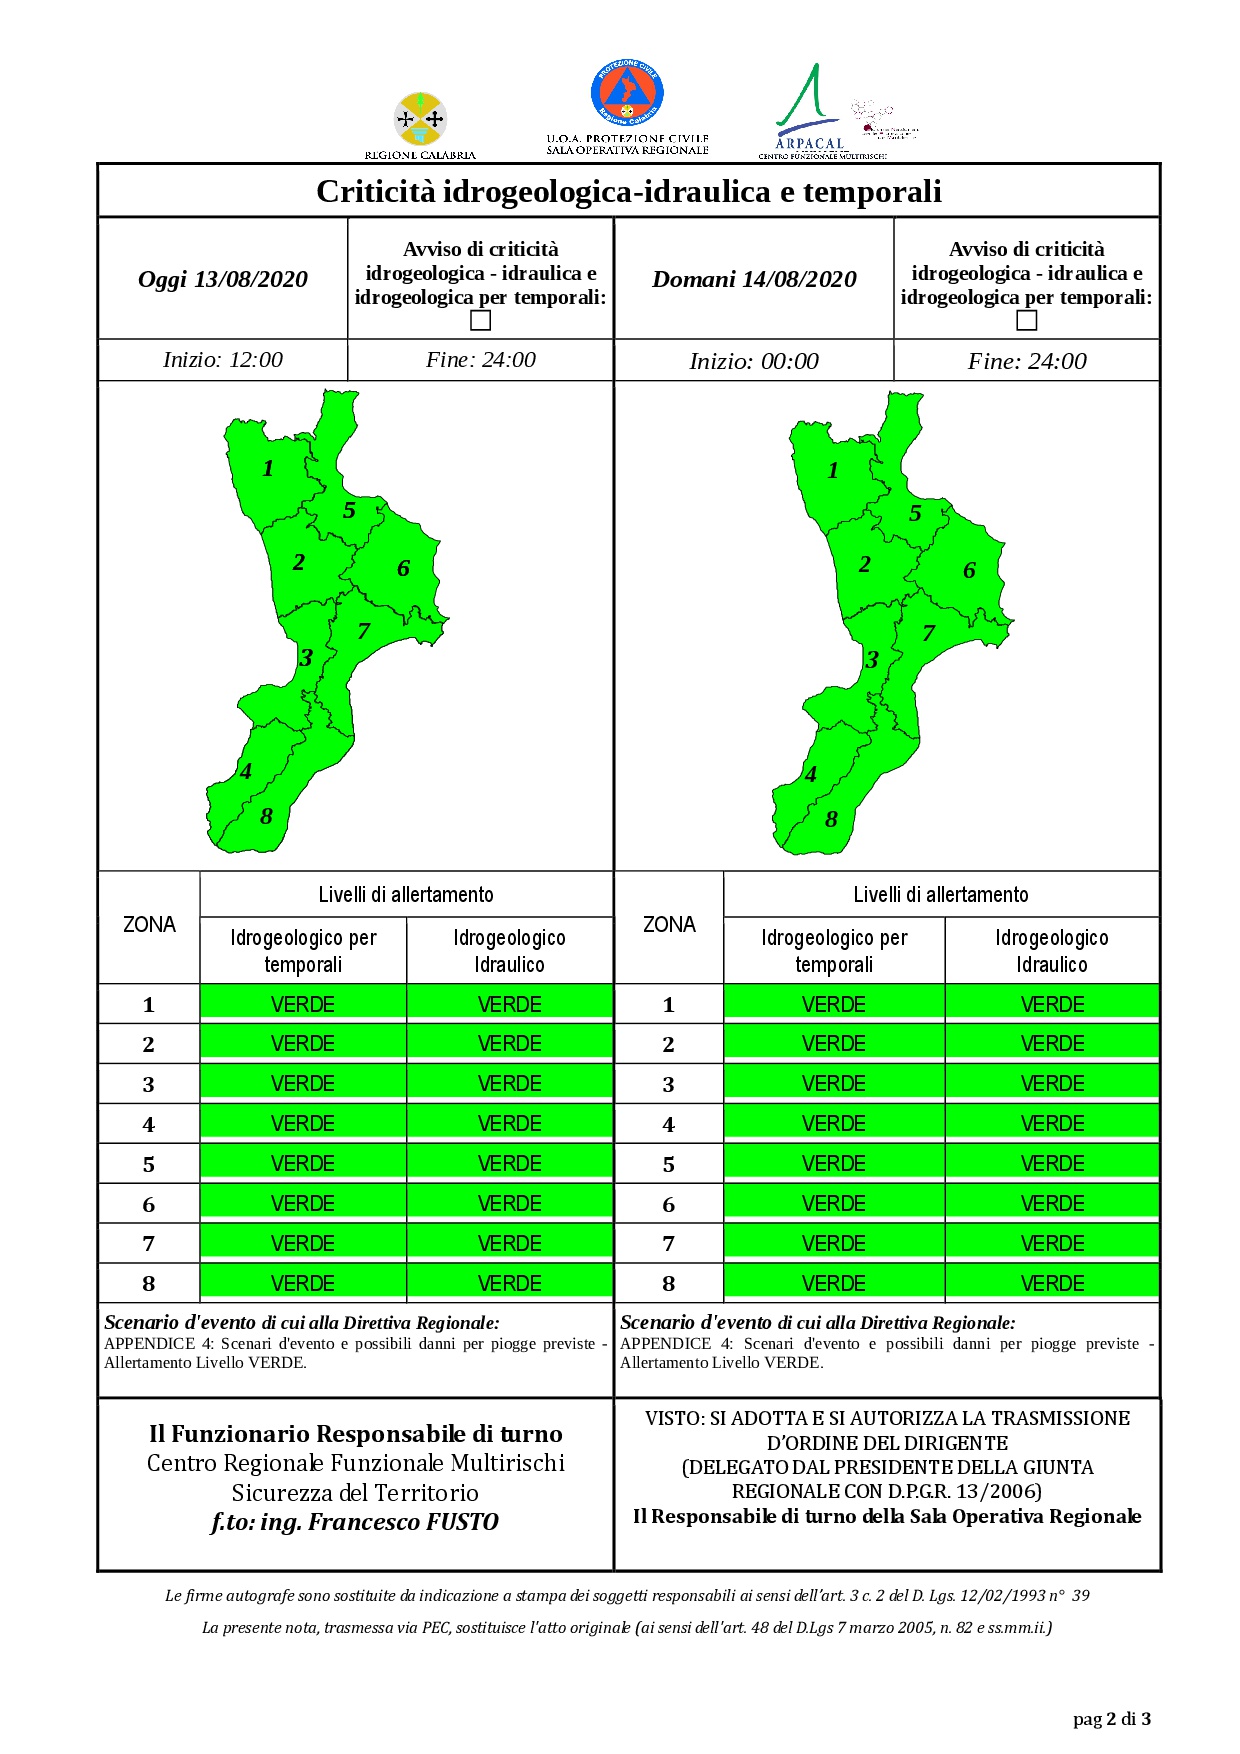 Criticità idrogeologica-idraulica e temporali in Calabria 13-08-2020